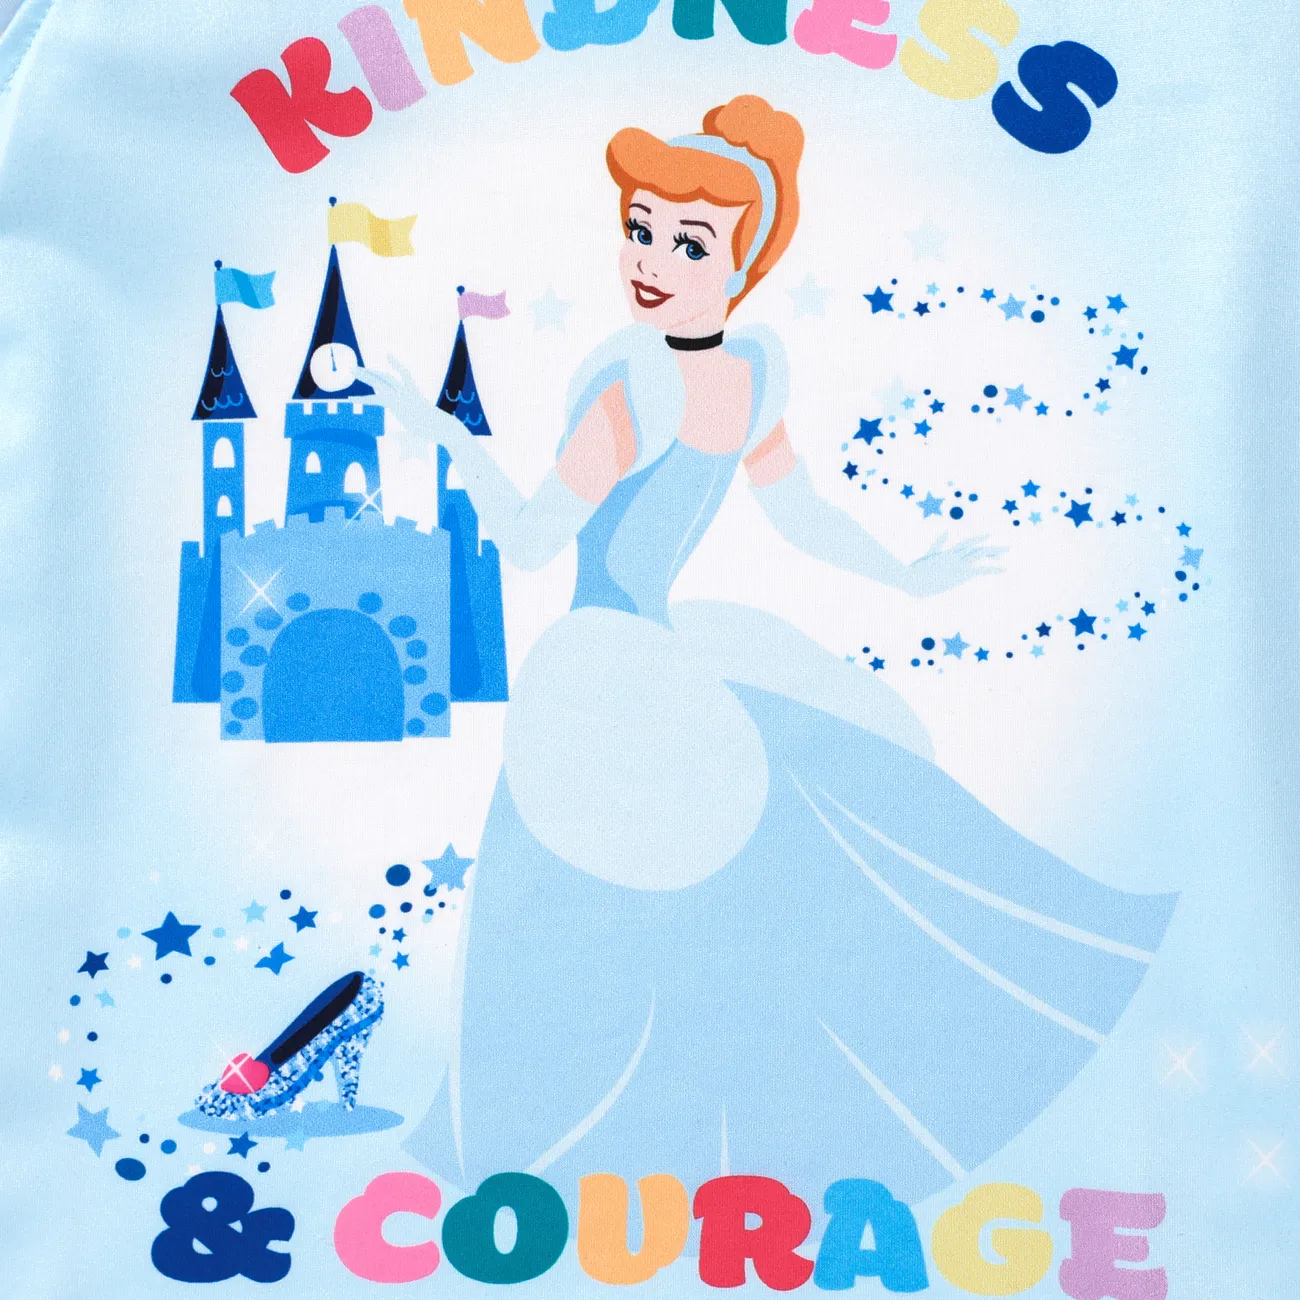 Disney princess Rainbow pattern Patchwork Mesh T-shirt
 Blue big image 1